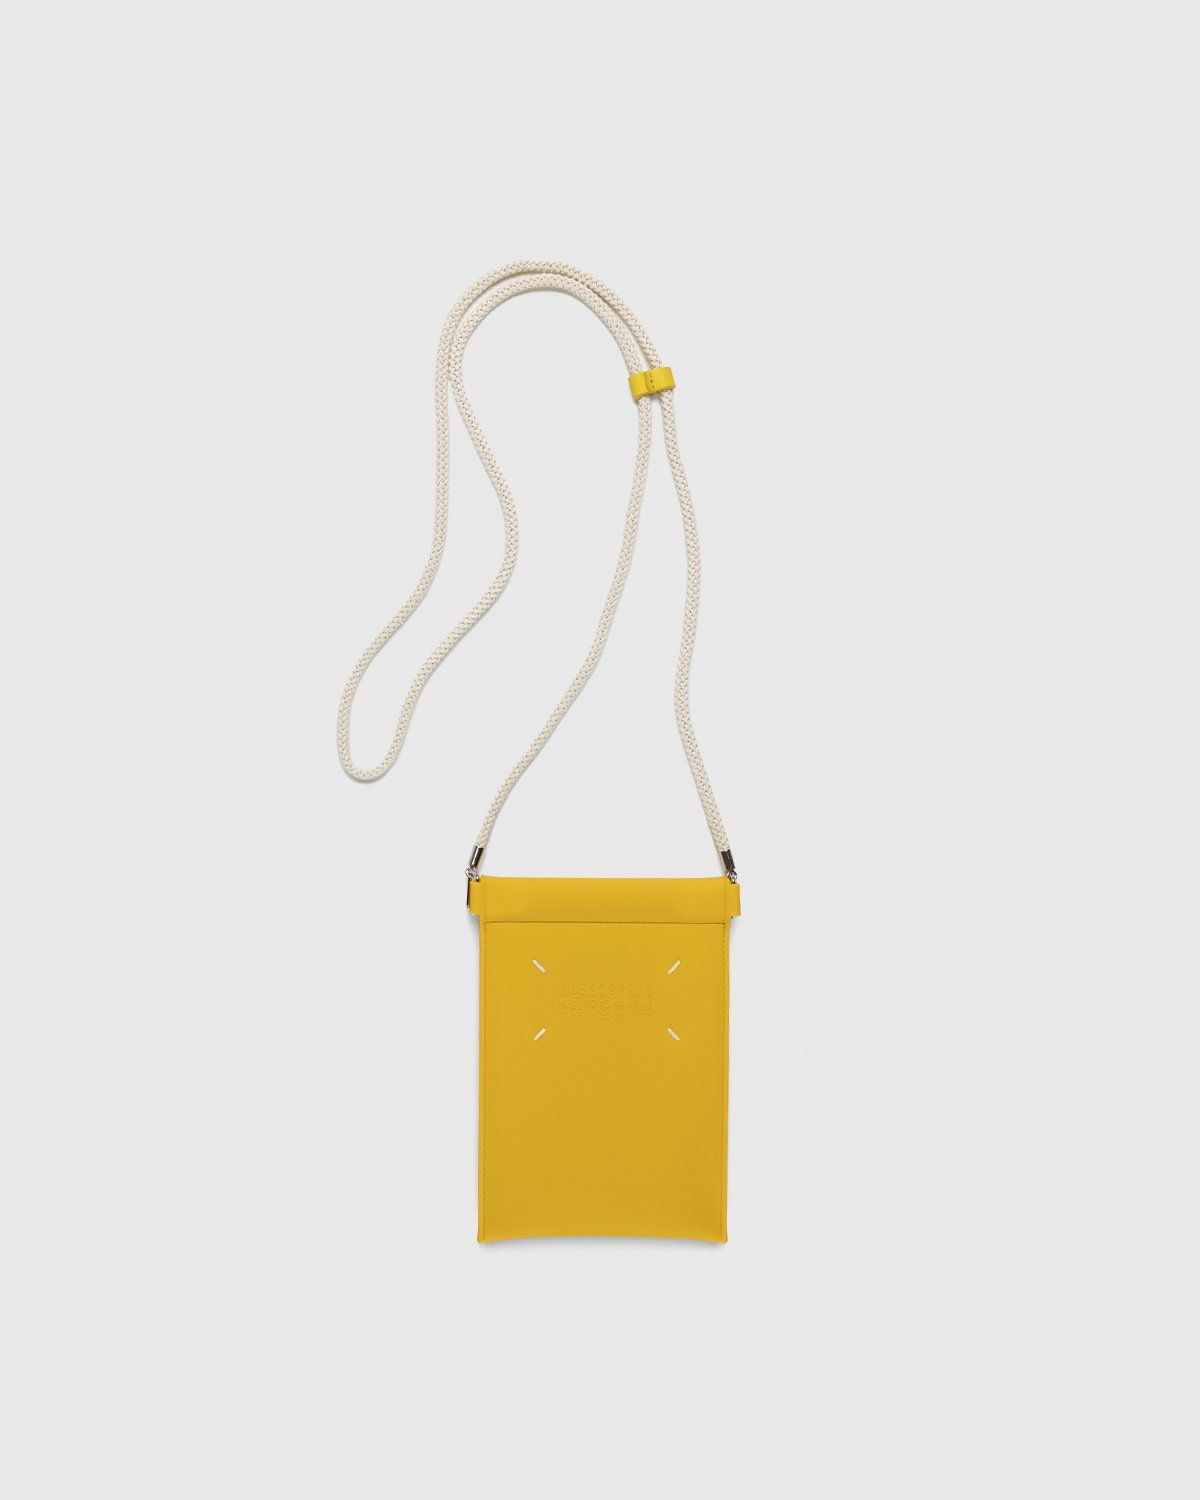 Maison Margiela – Rubber Leather Phone Case Yellow - Phone cases - Yellow - Image 1